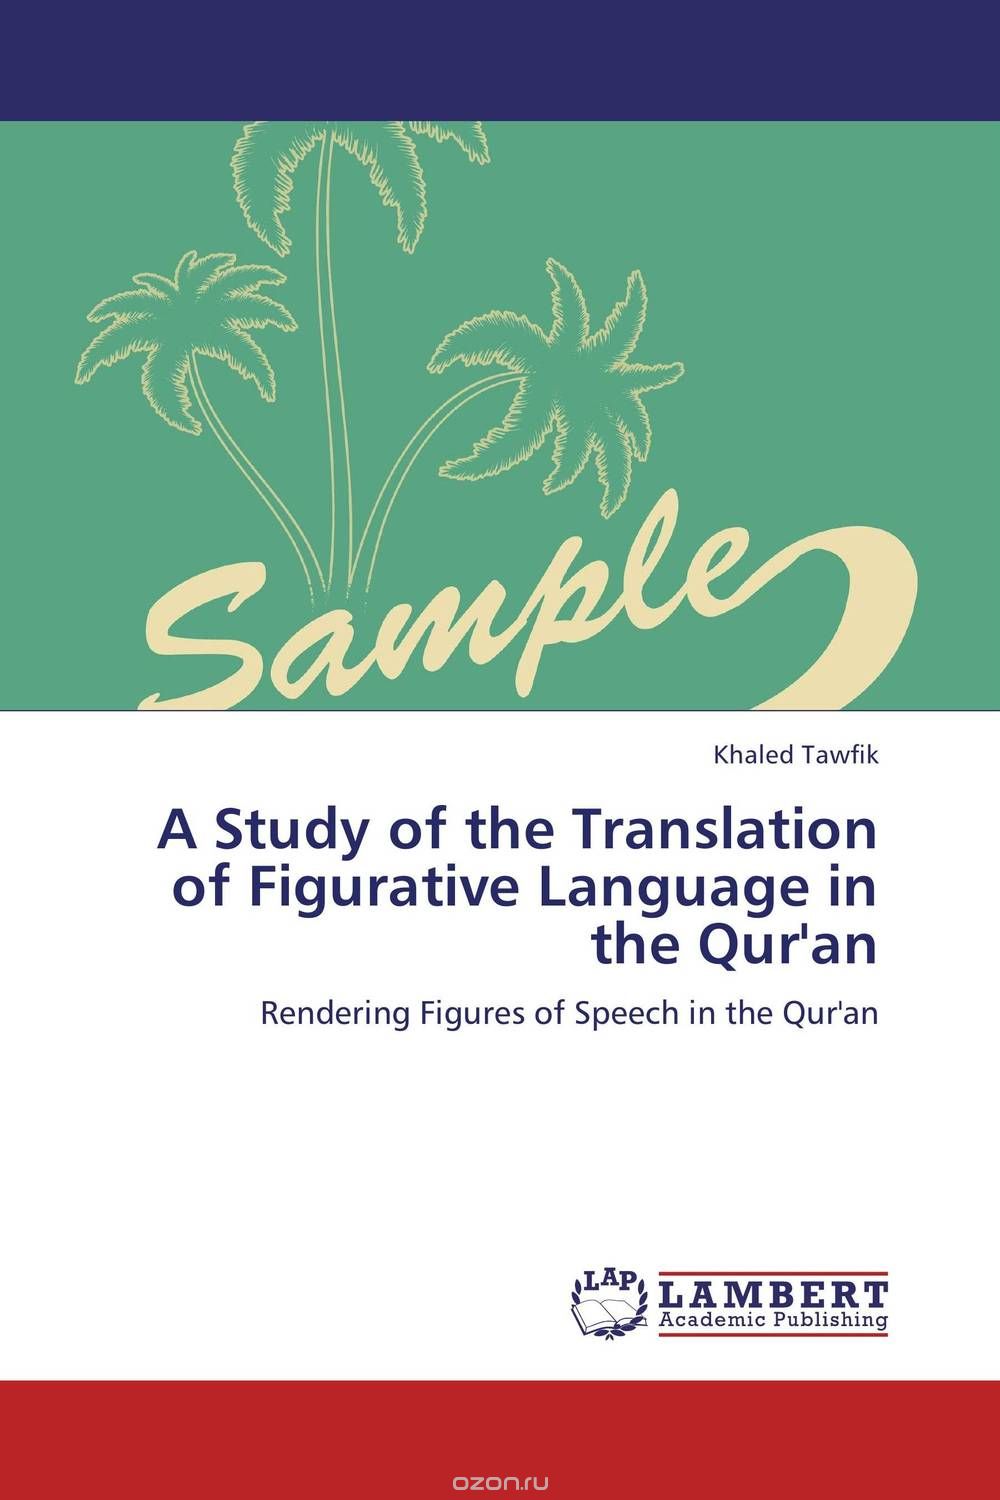 Скачать книгу "A Study of the Translation of Figurative Language in the Qur'an"